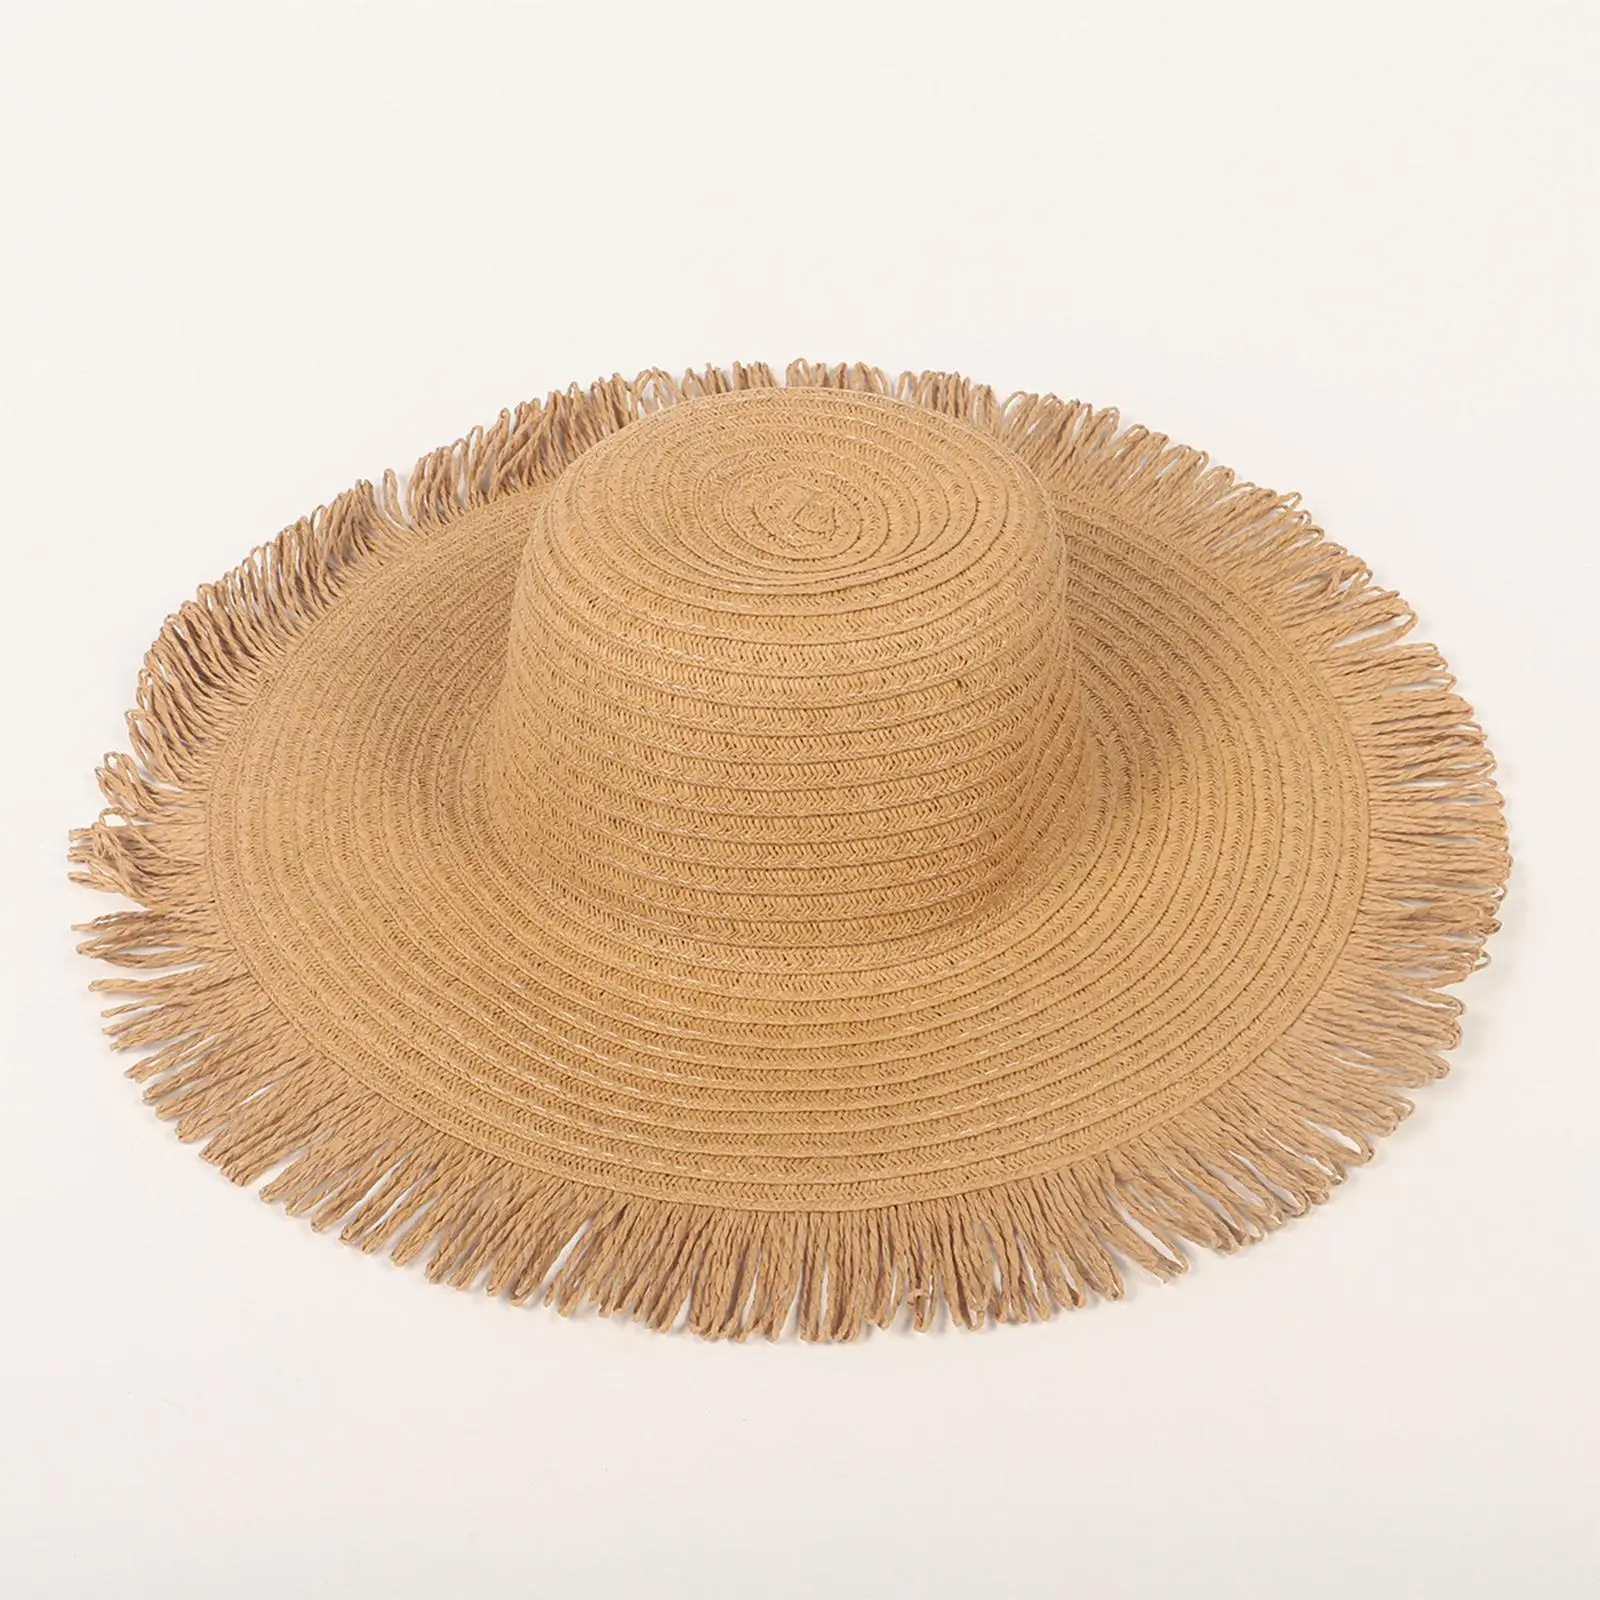 Straw Sun Hat, Sun Protective Wide Tassels Brim 18